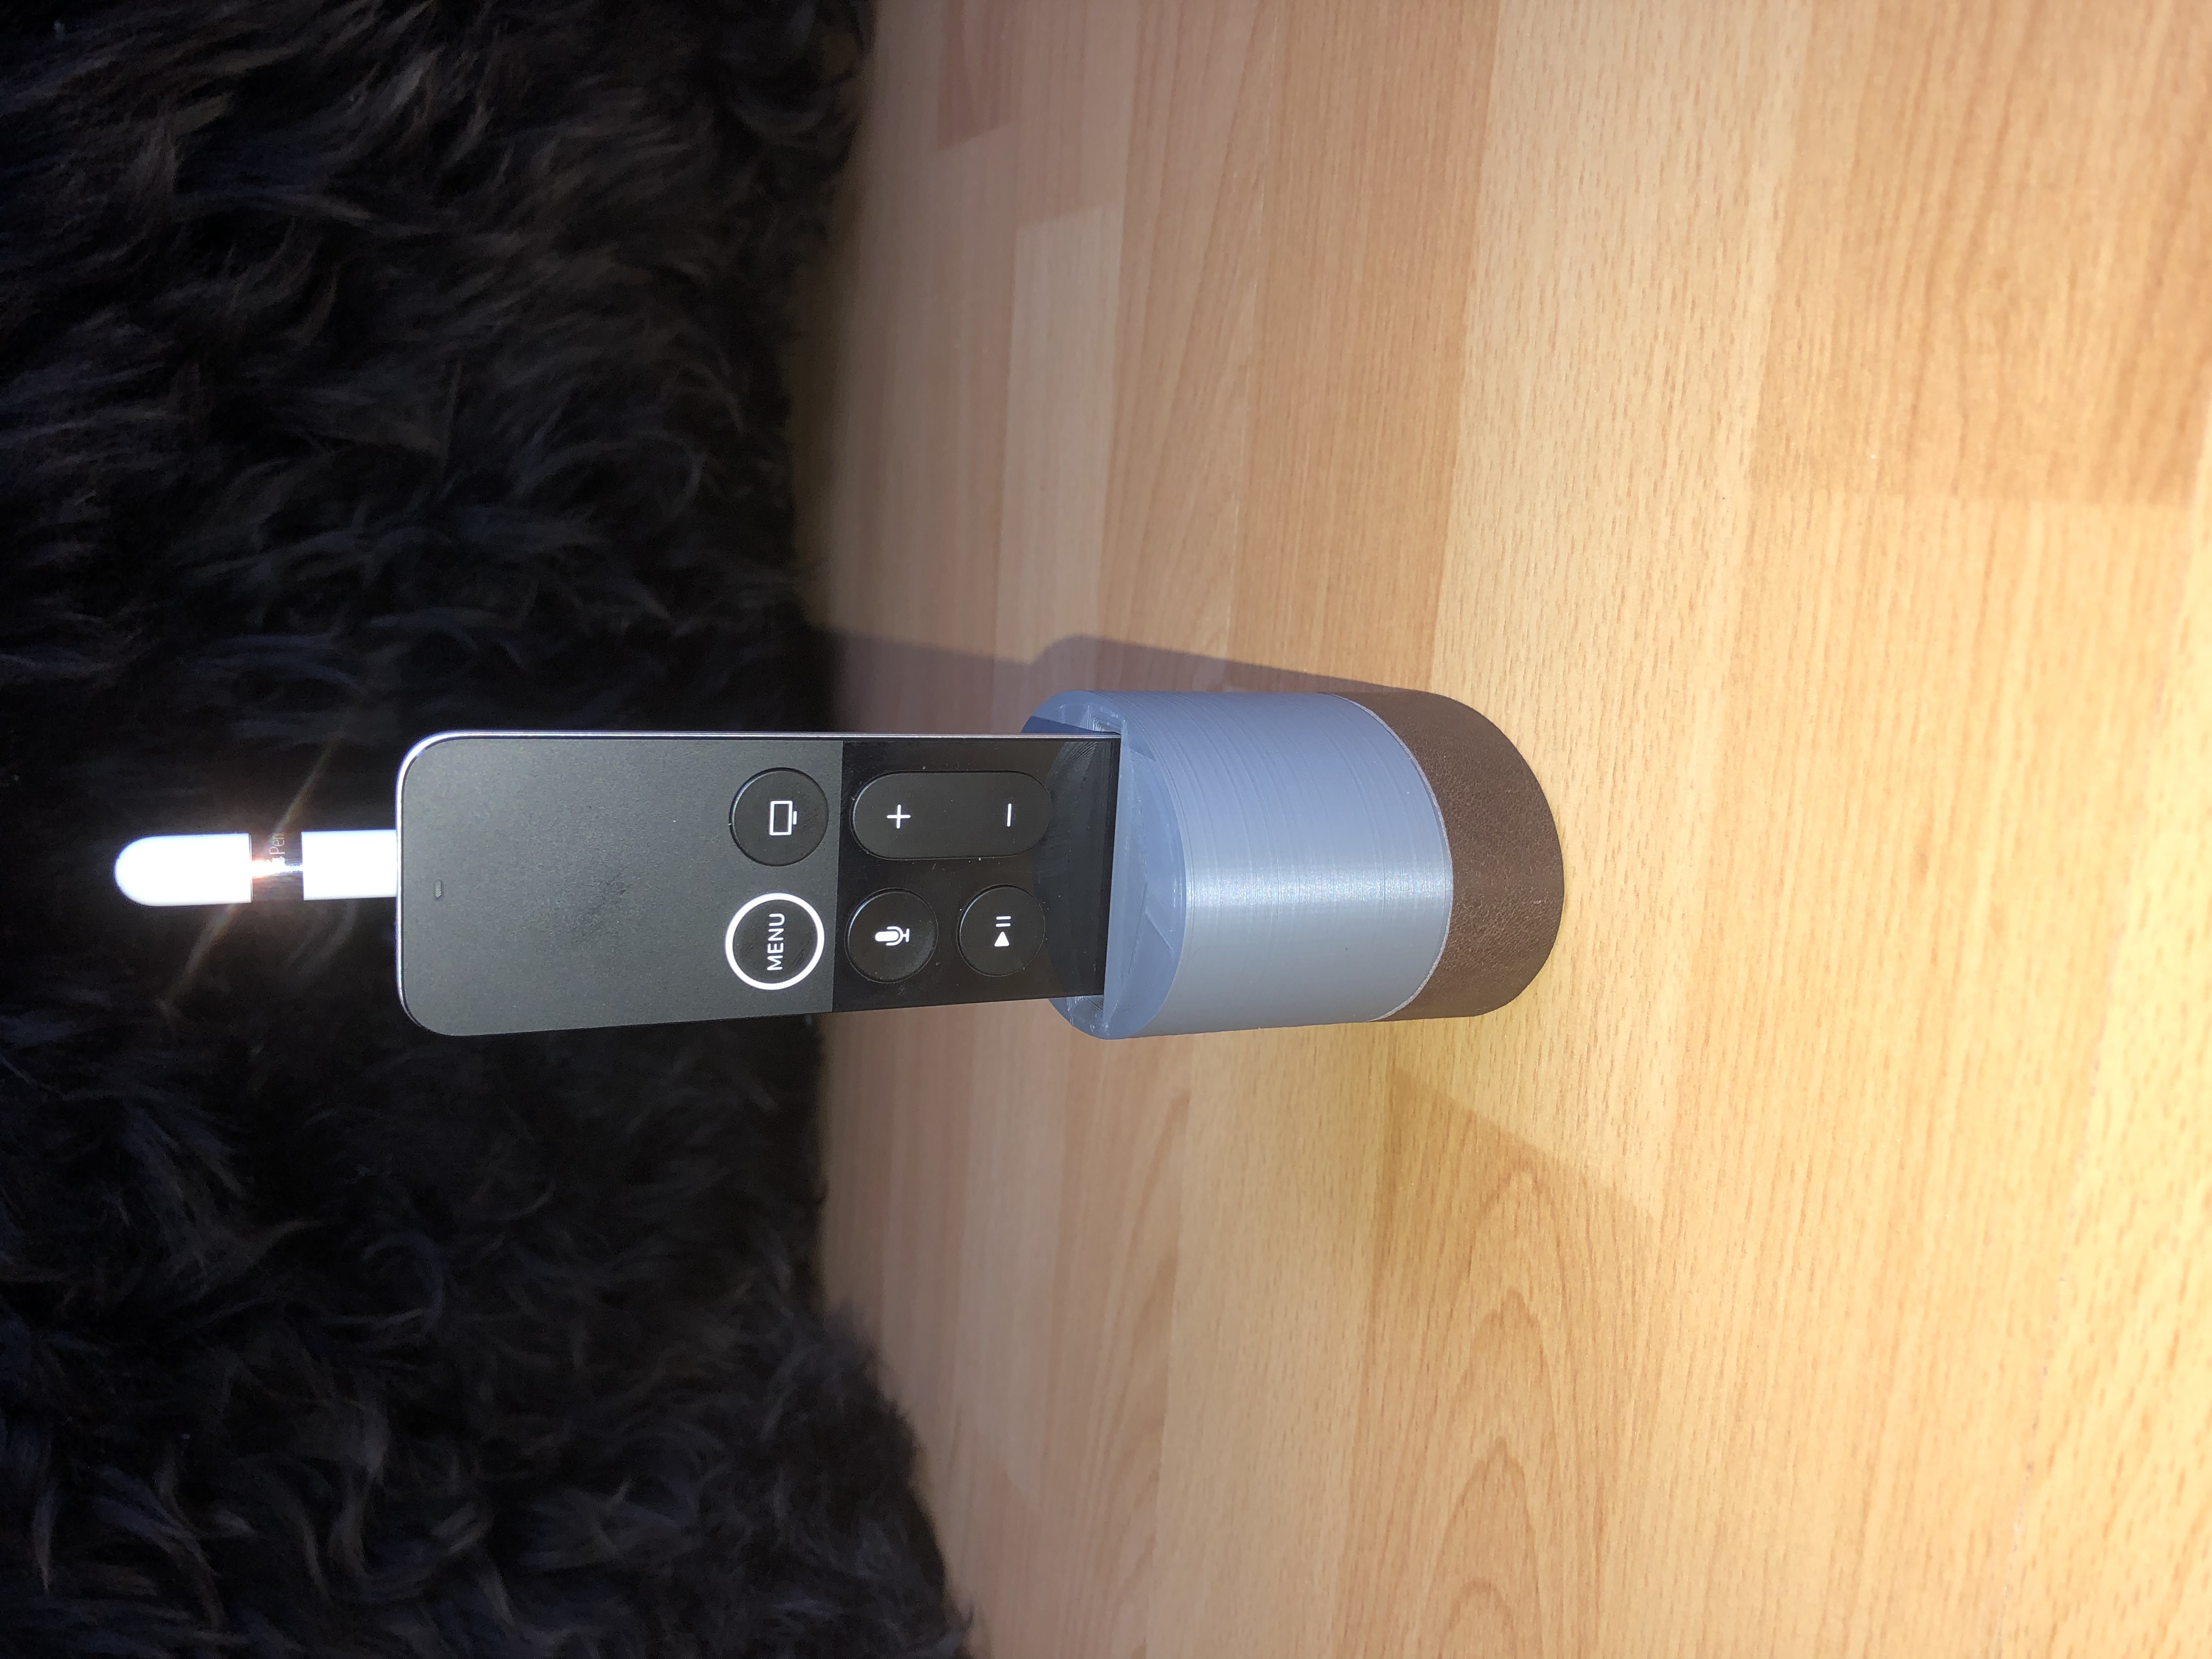 AppleTV remote and pencil holder